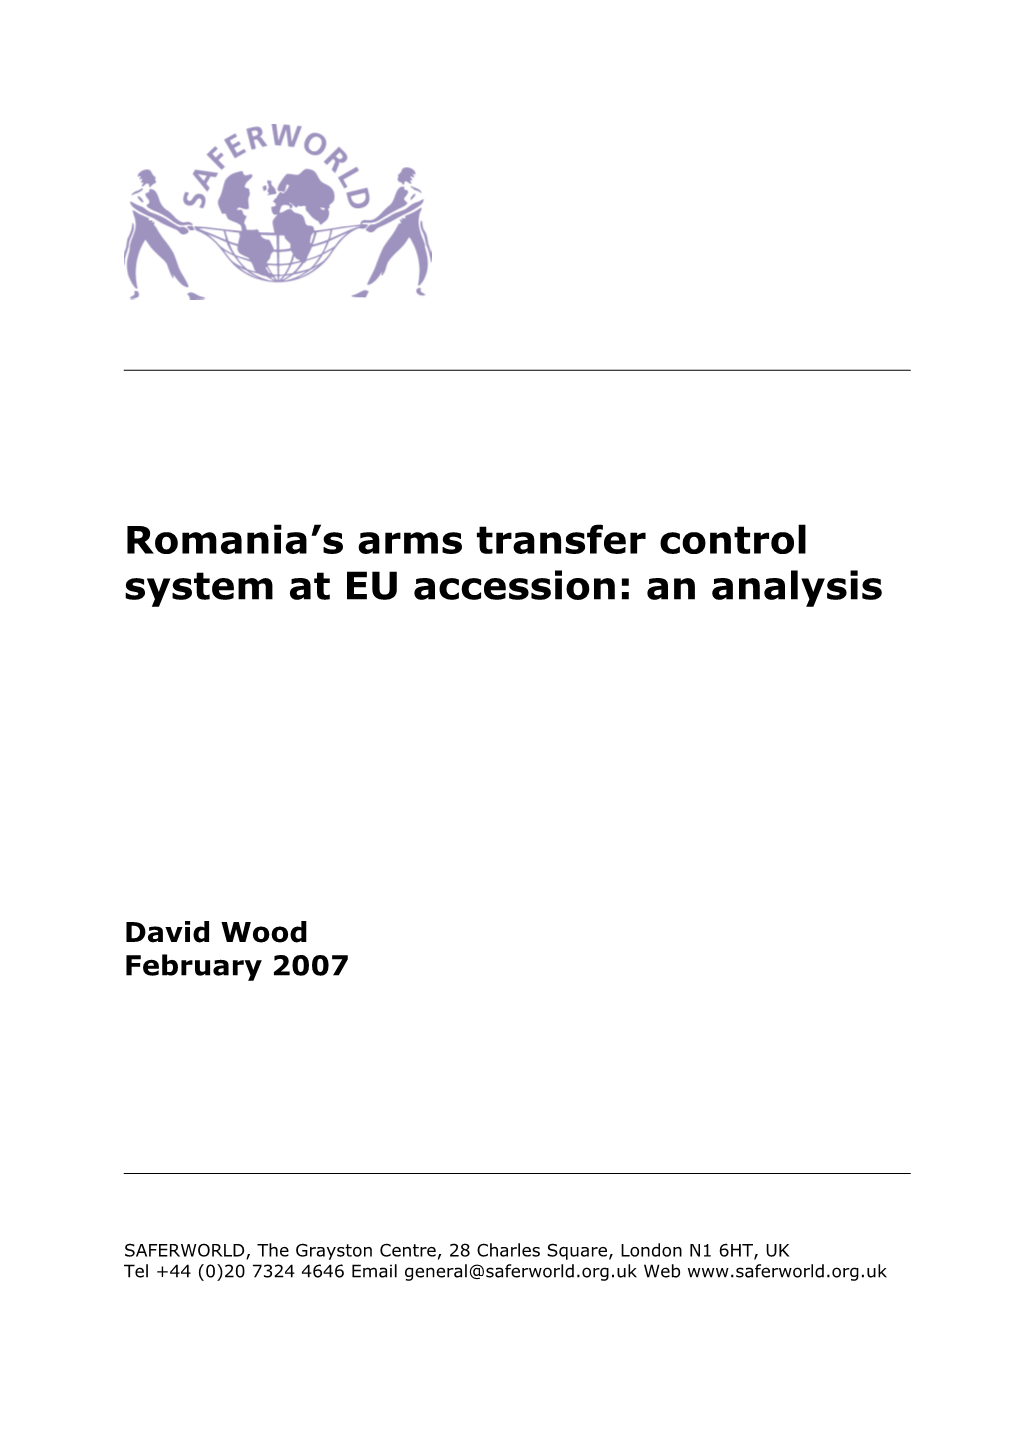 Romania's Arms Transfer Control